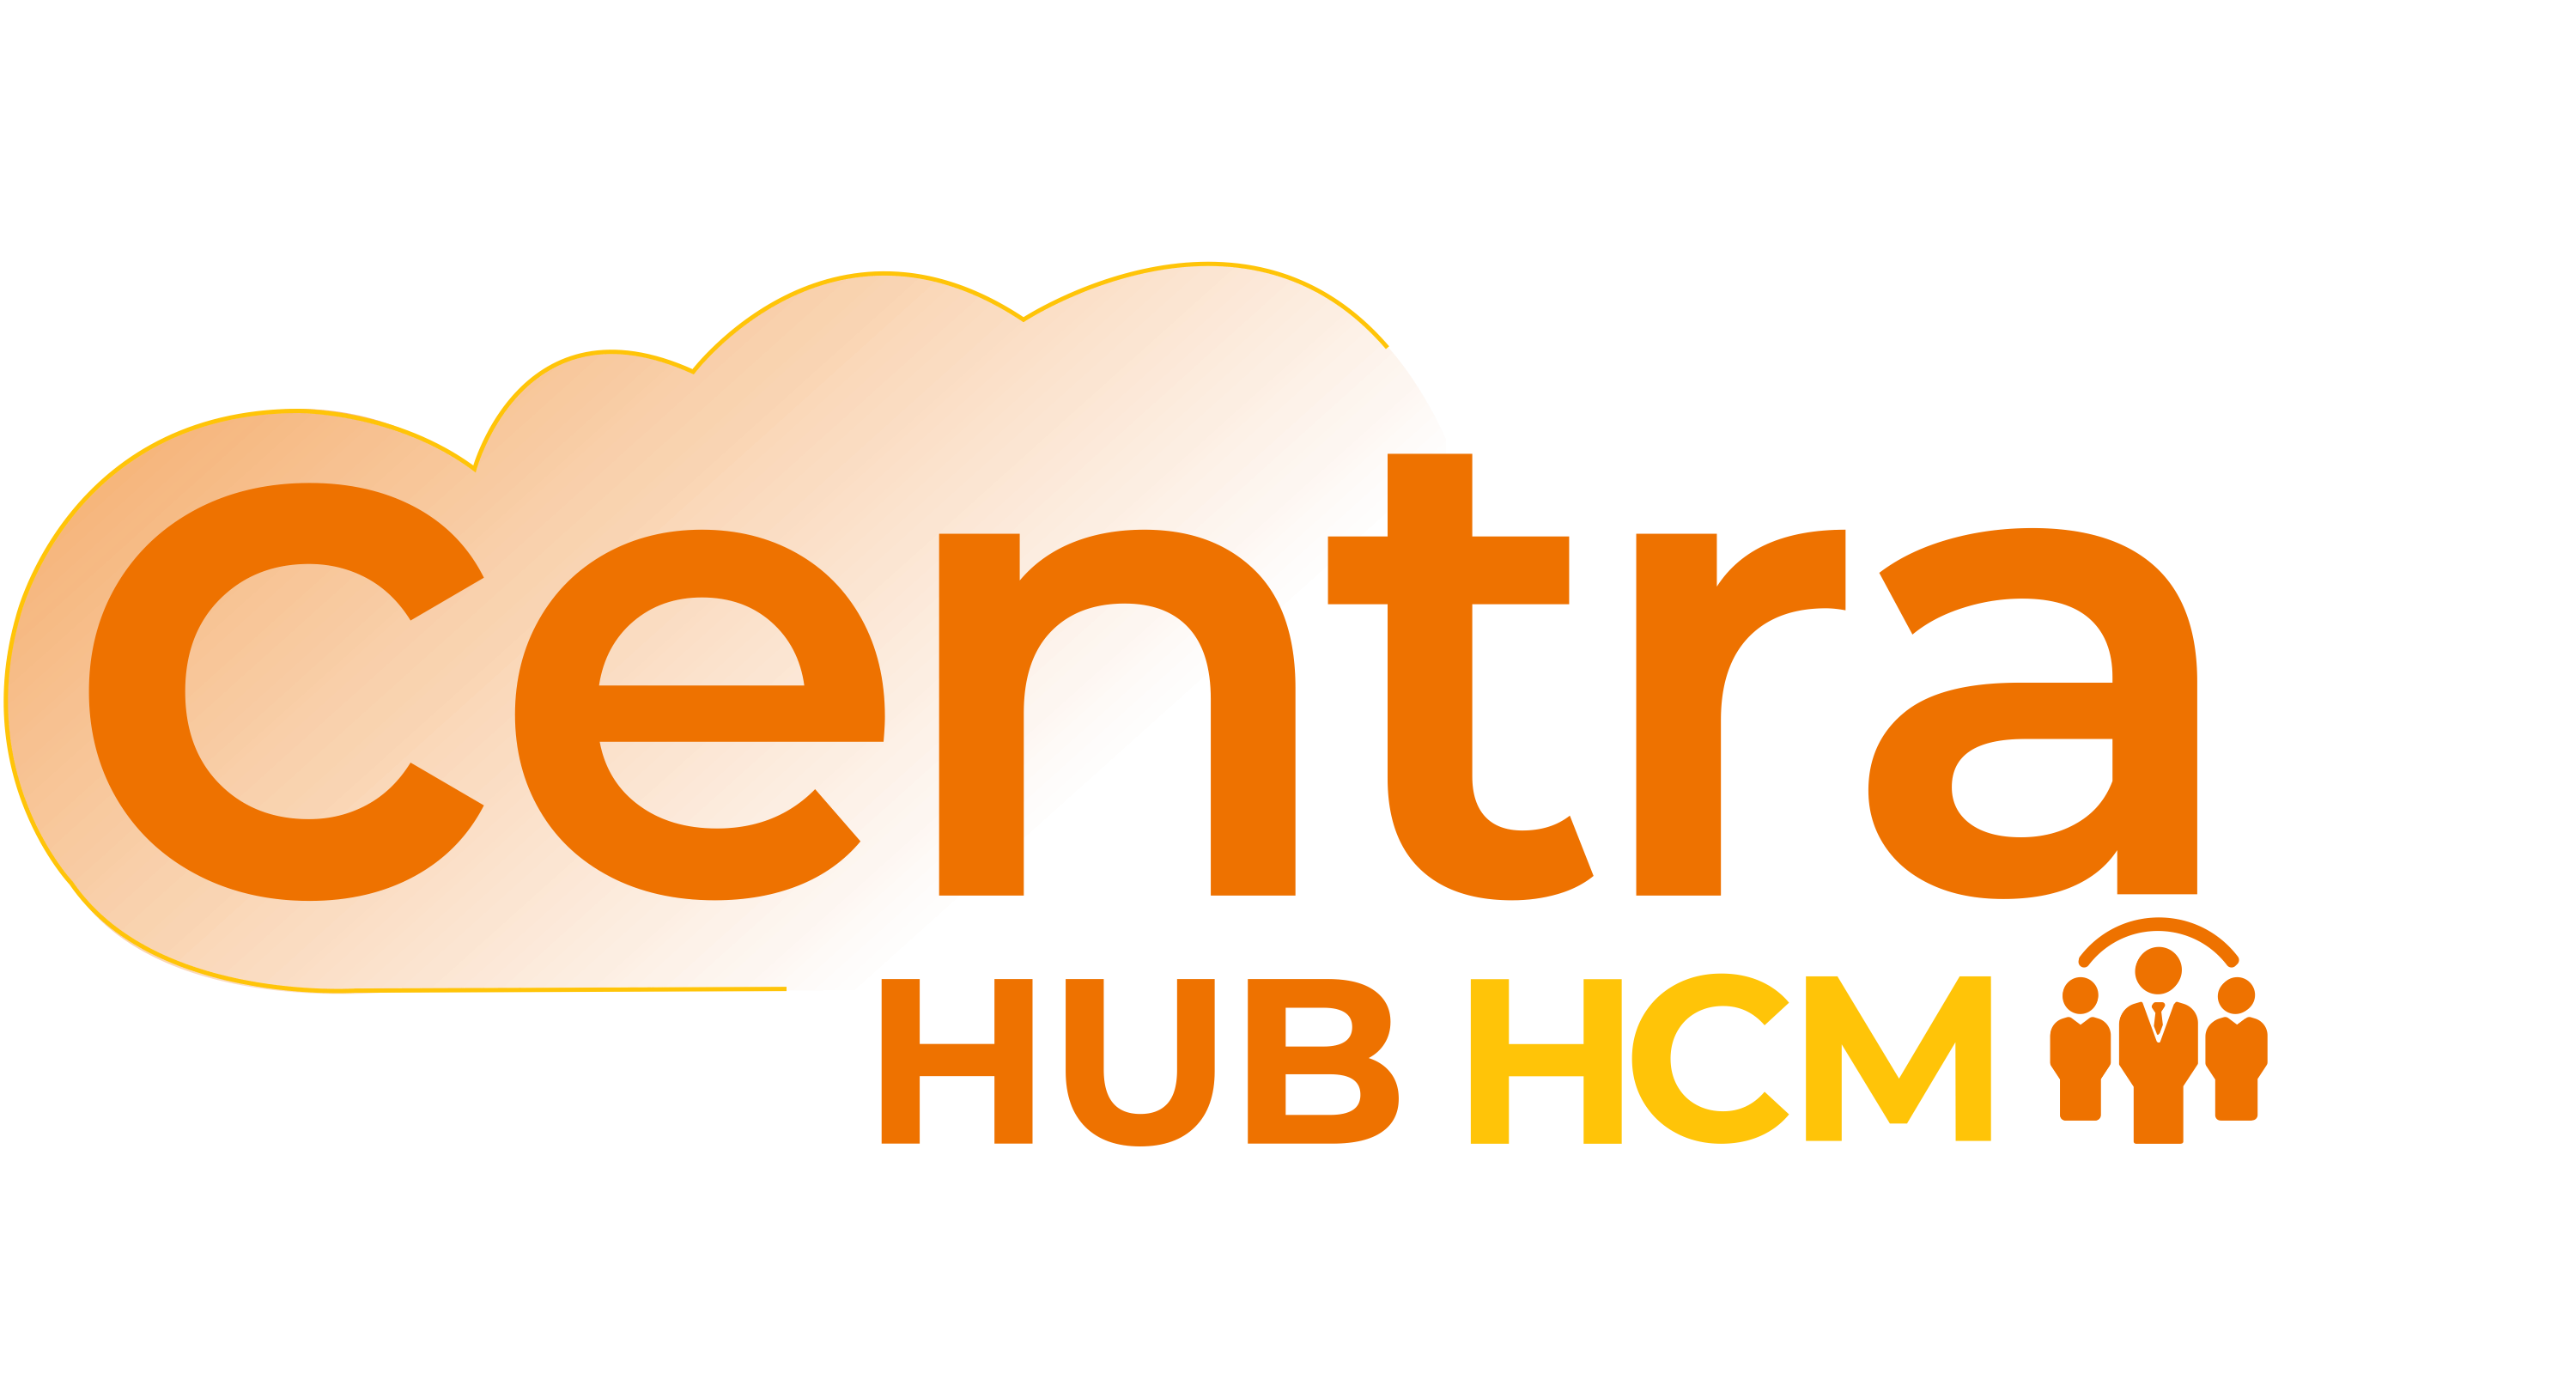 Centra Hub HCM